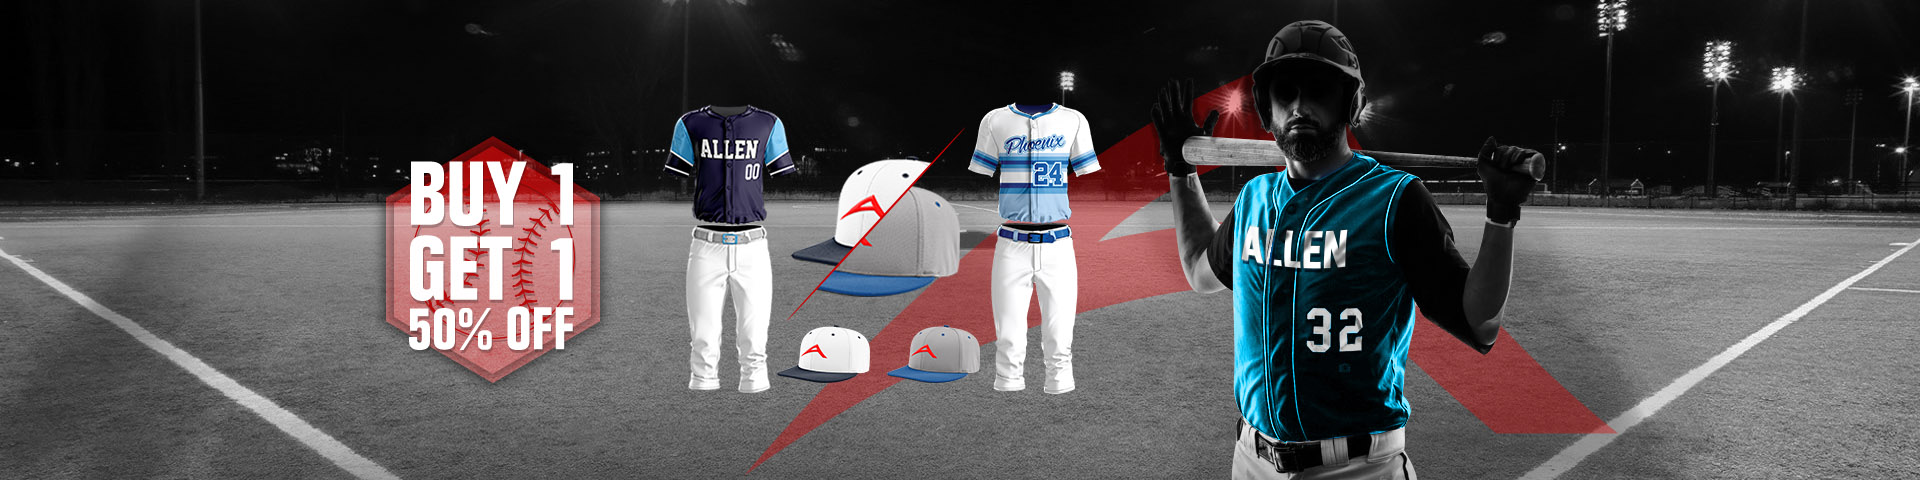 Baseball Uniforms - Custom Designs & Discounted Team Packs